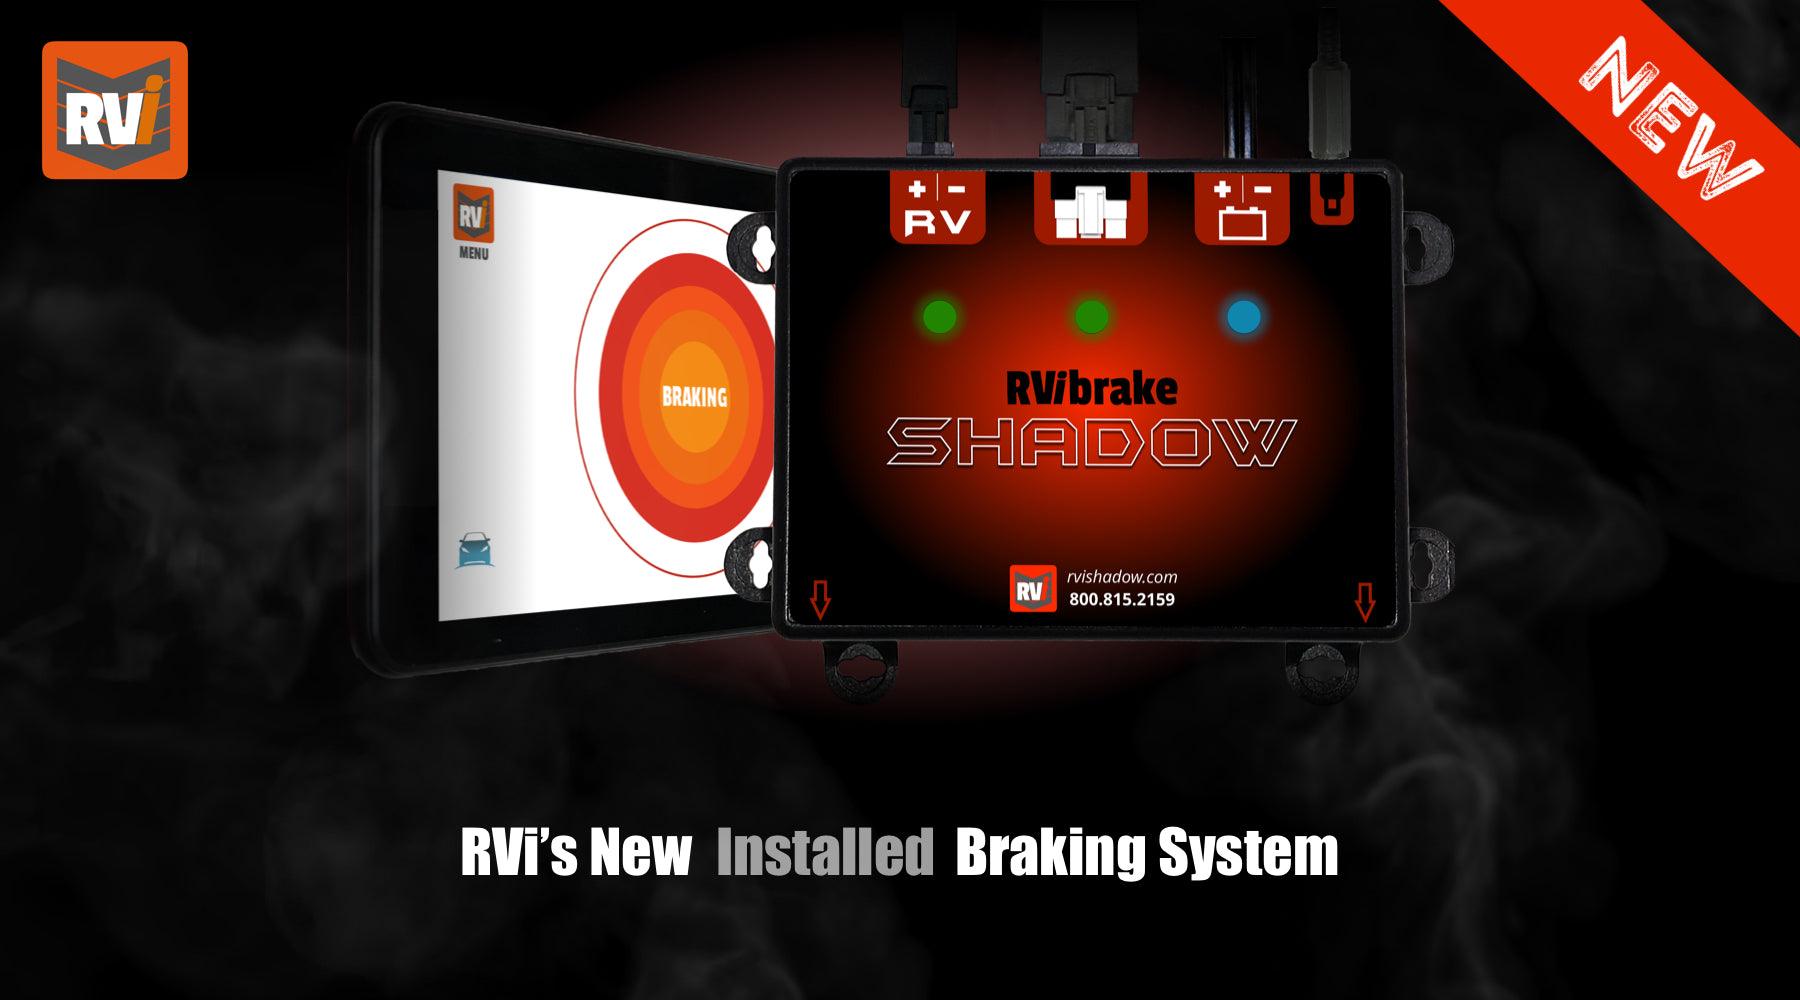 RVibrake Shadow: RVi's New Installed Braking System - RVi